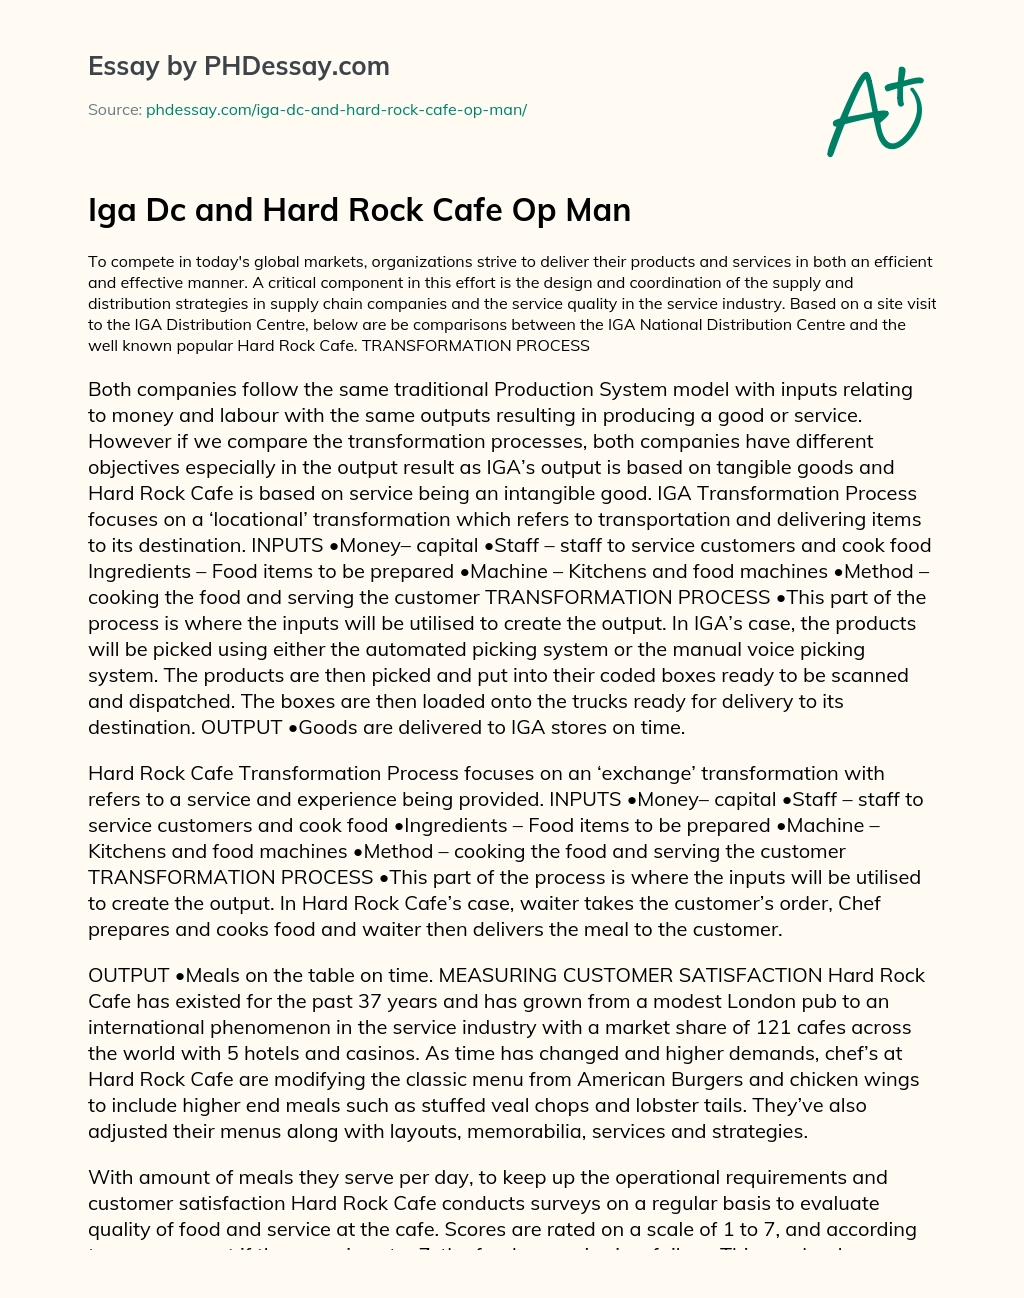 Iga Dc and Hard Rock Cafe Op Man essay